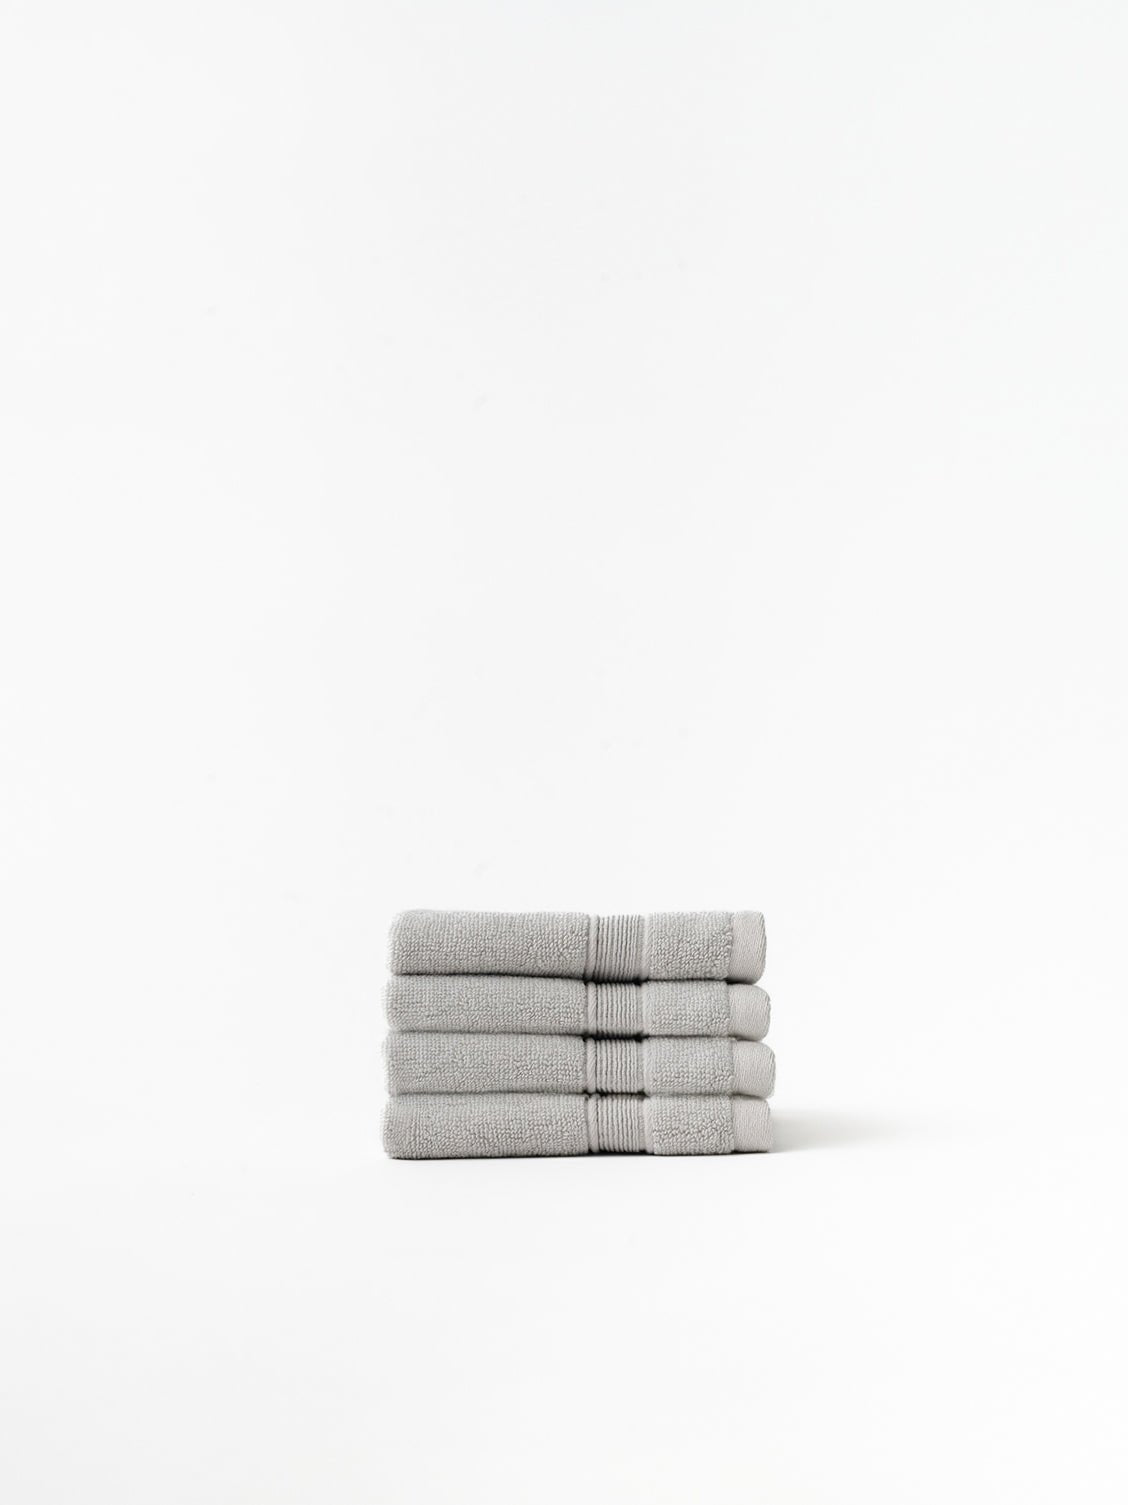 Light grey washcloths folded with white background |Color:Light Grey